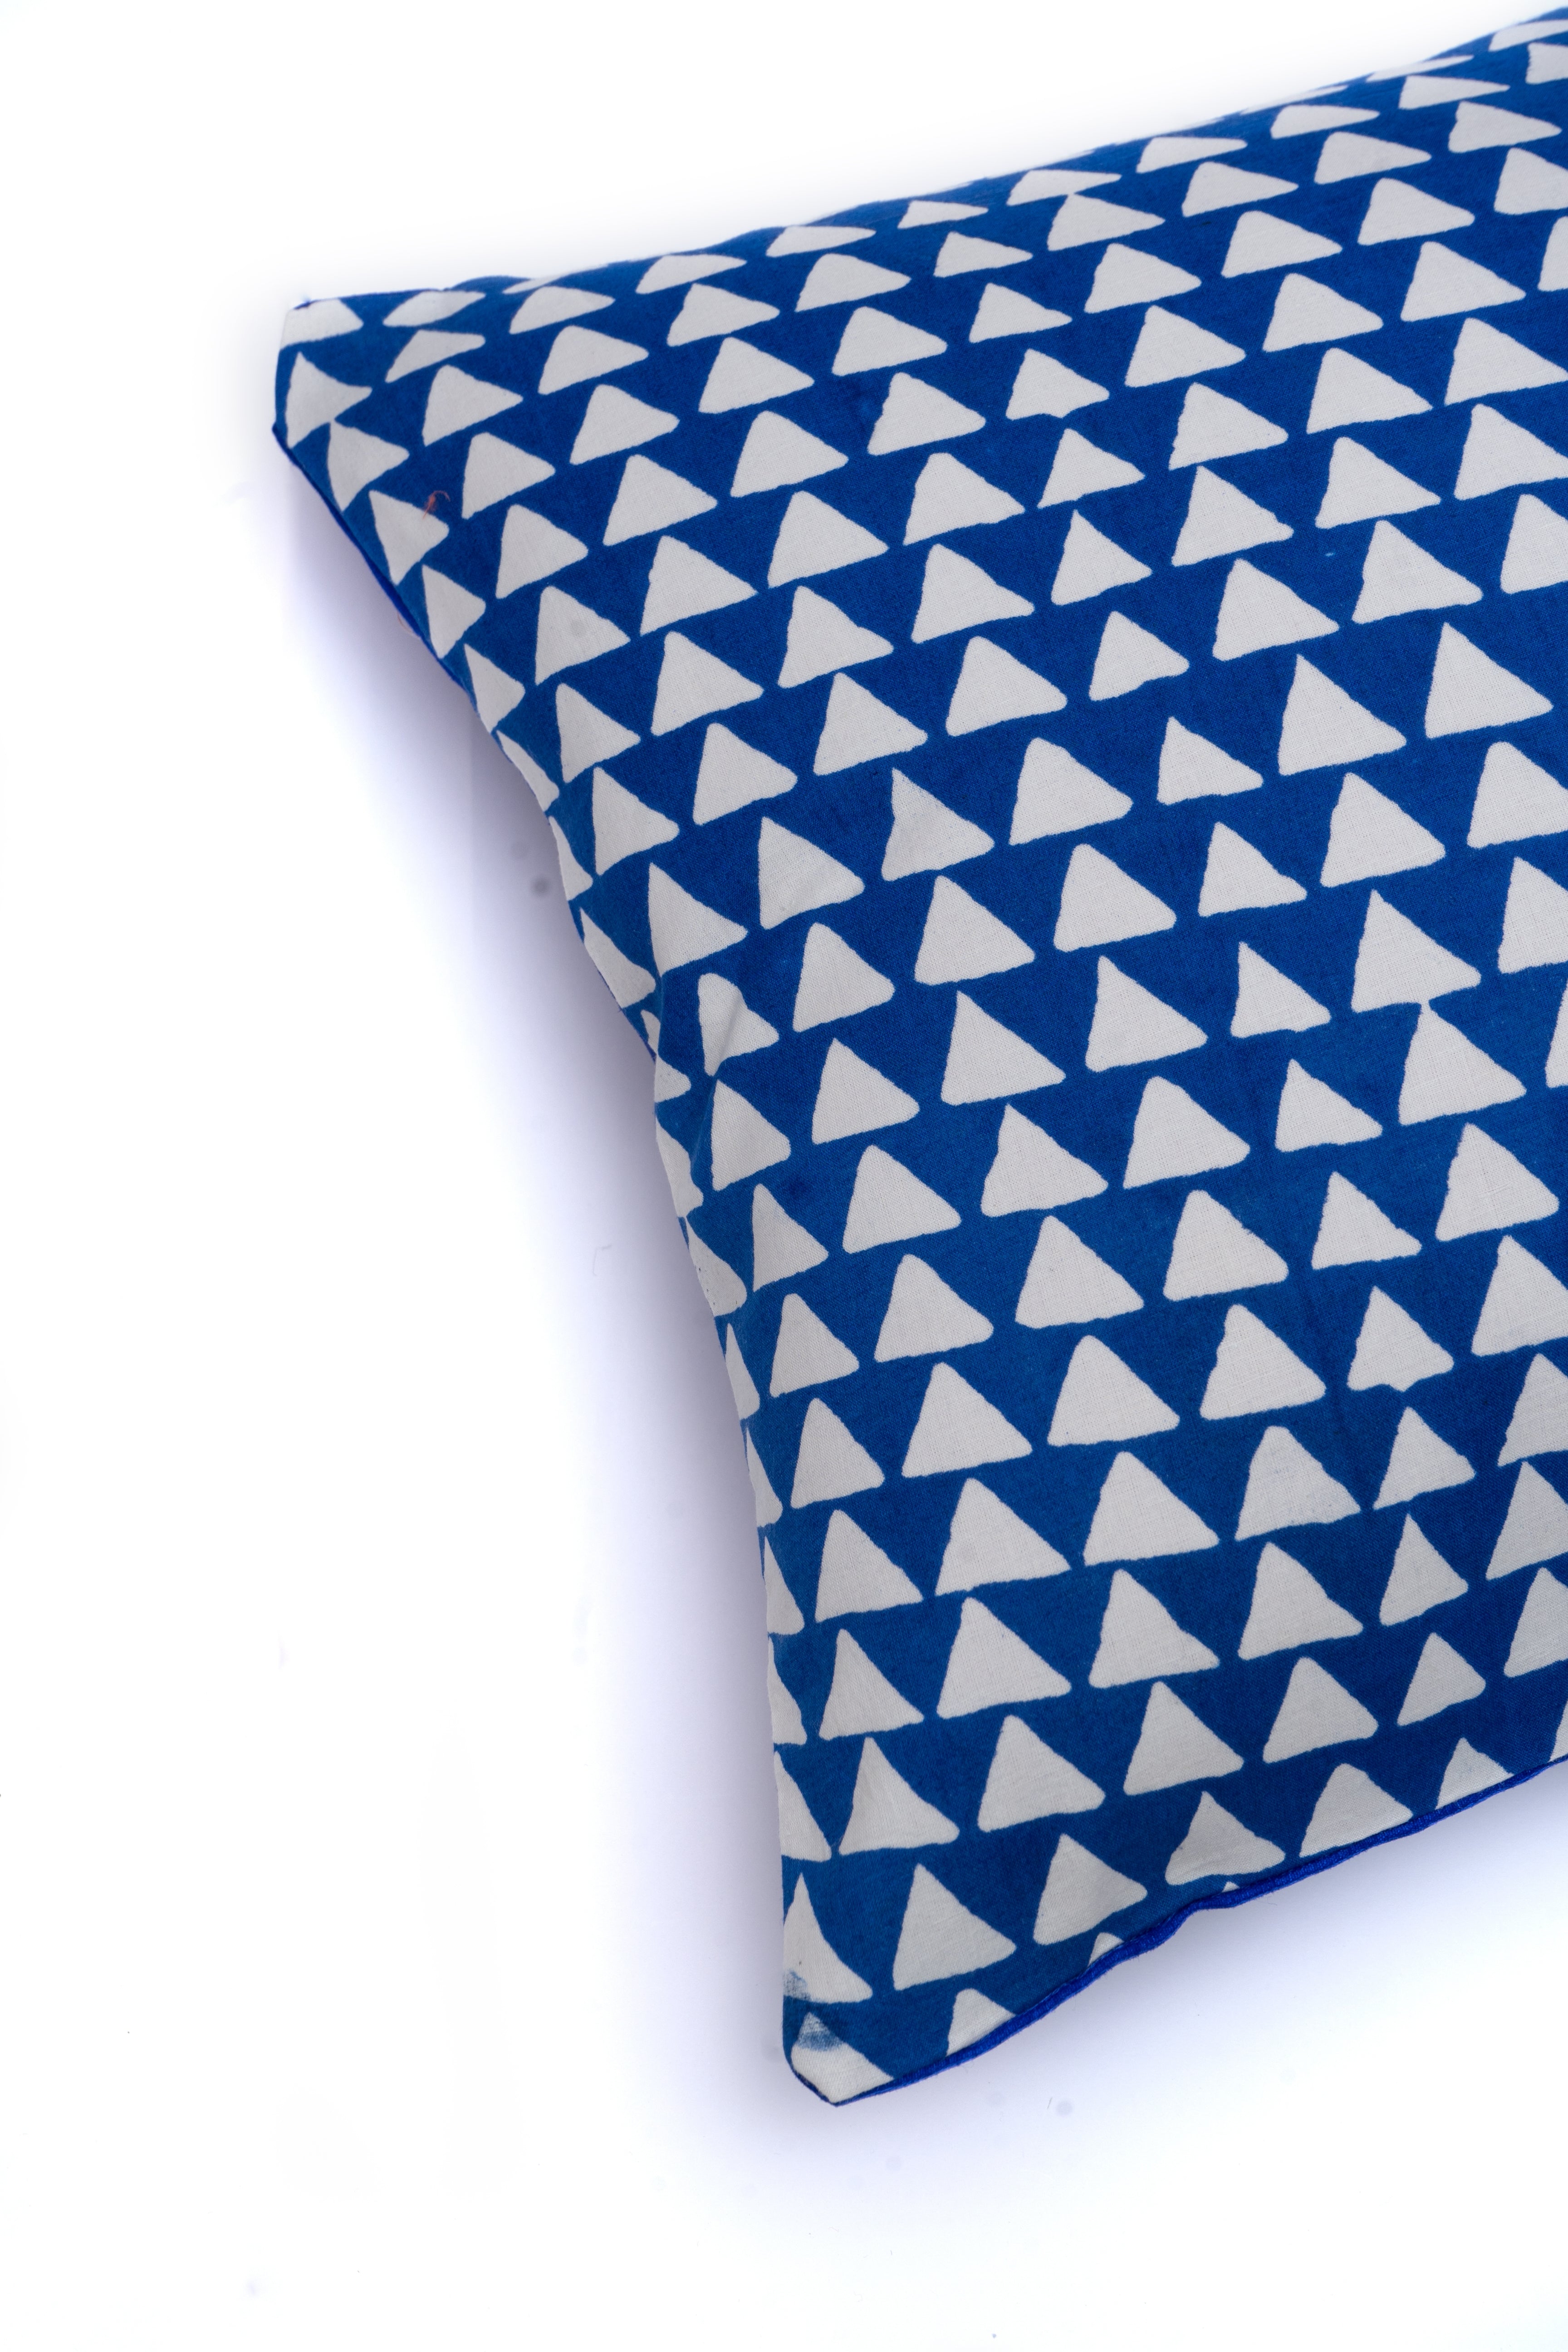 Blue Triangle Print Cushion Cover